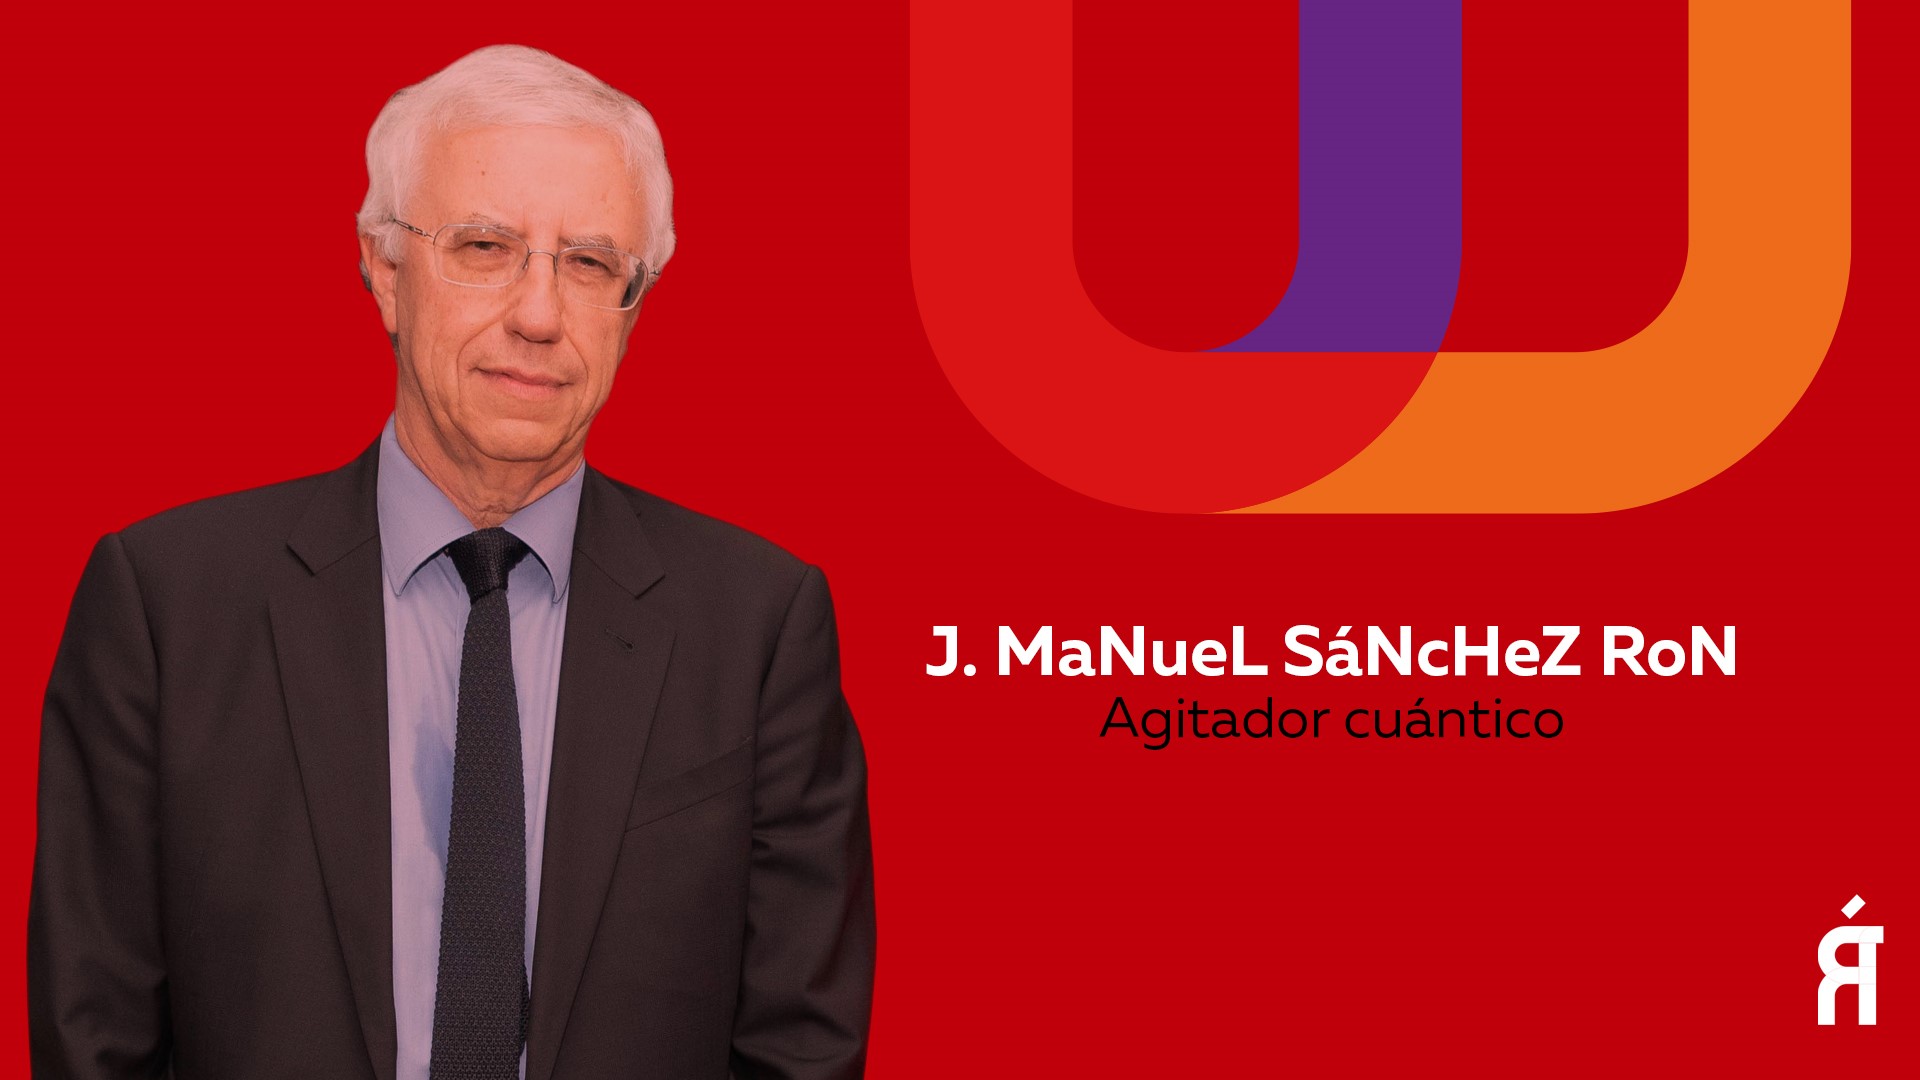 José Manuel Sánchez Ron